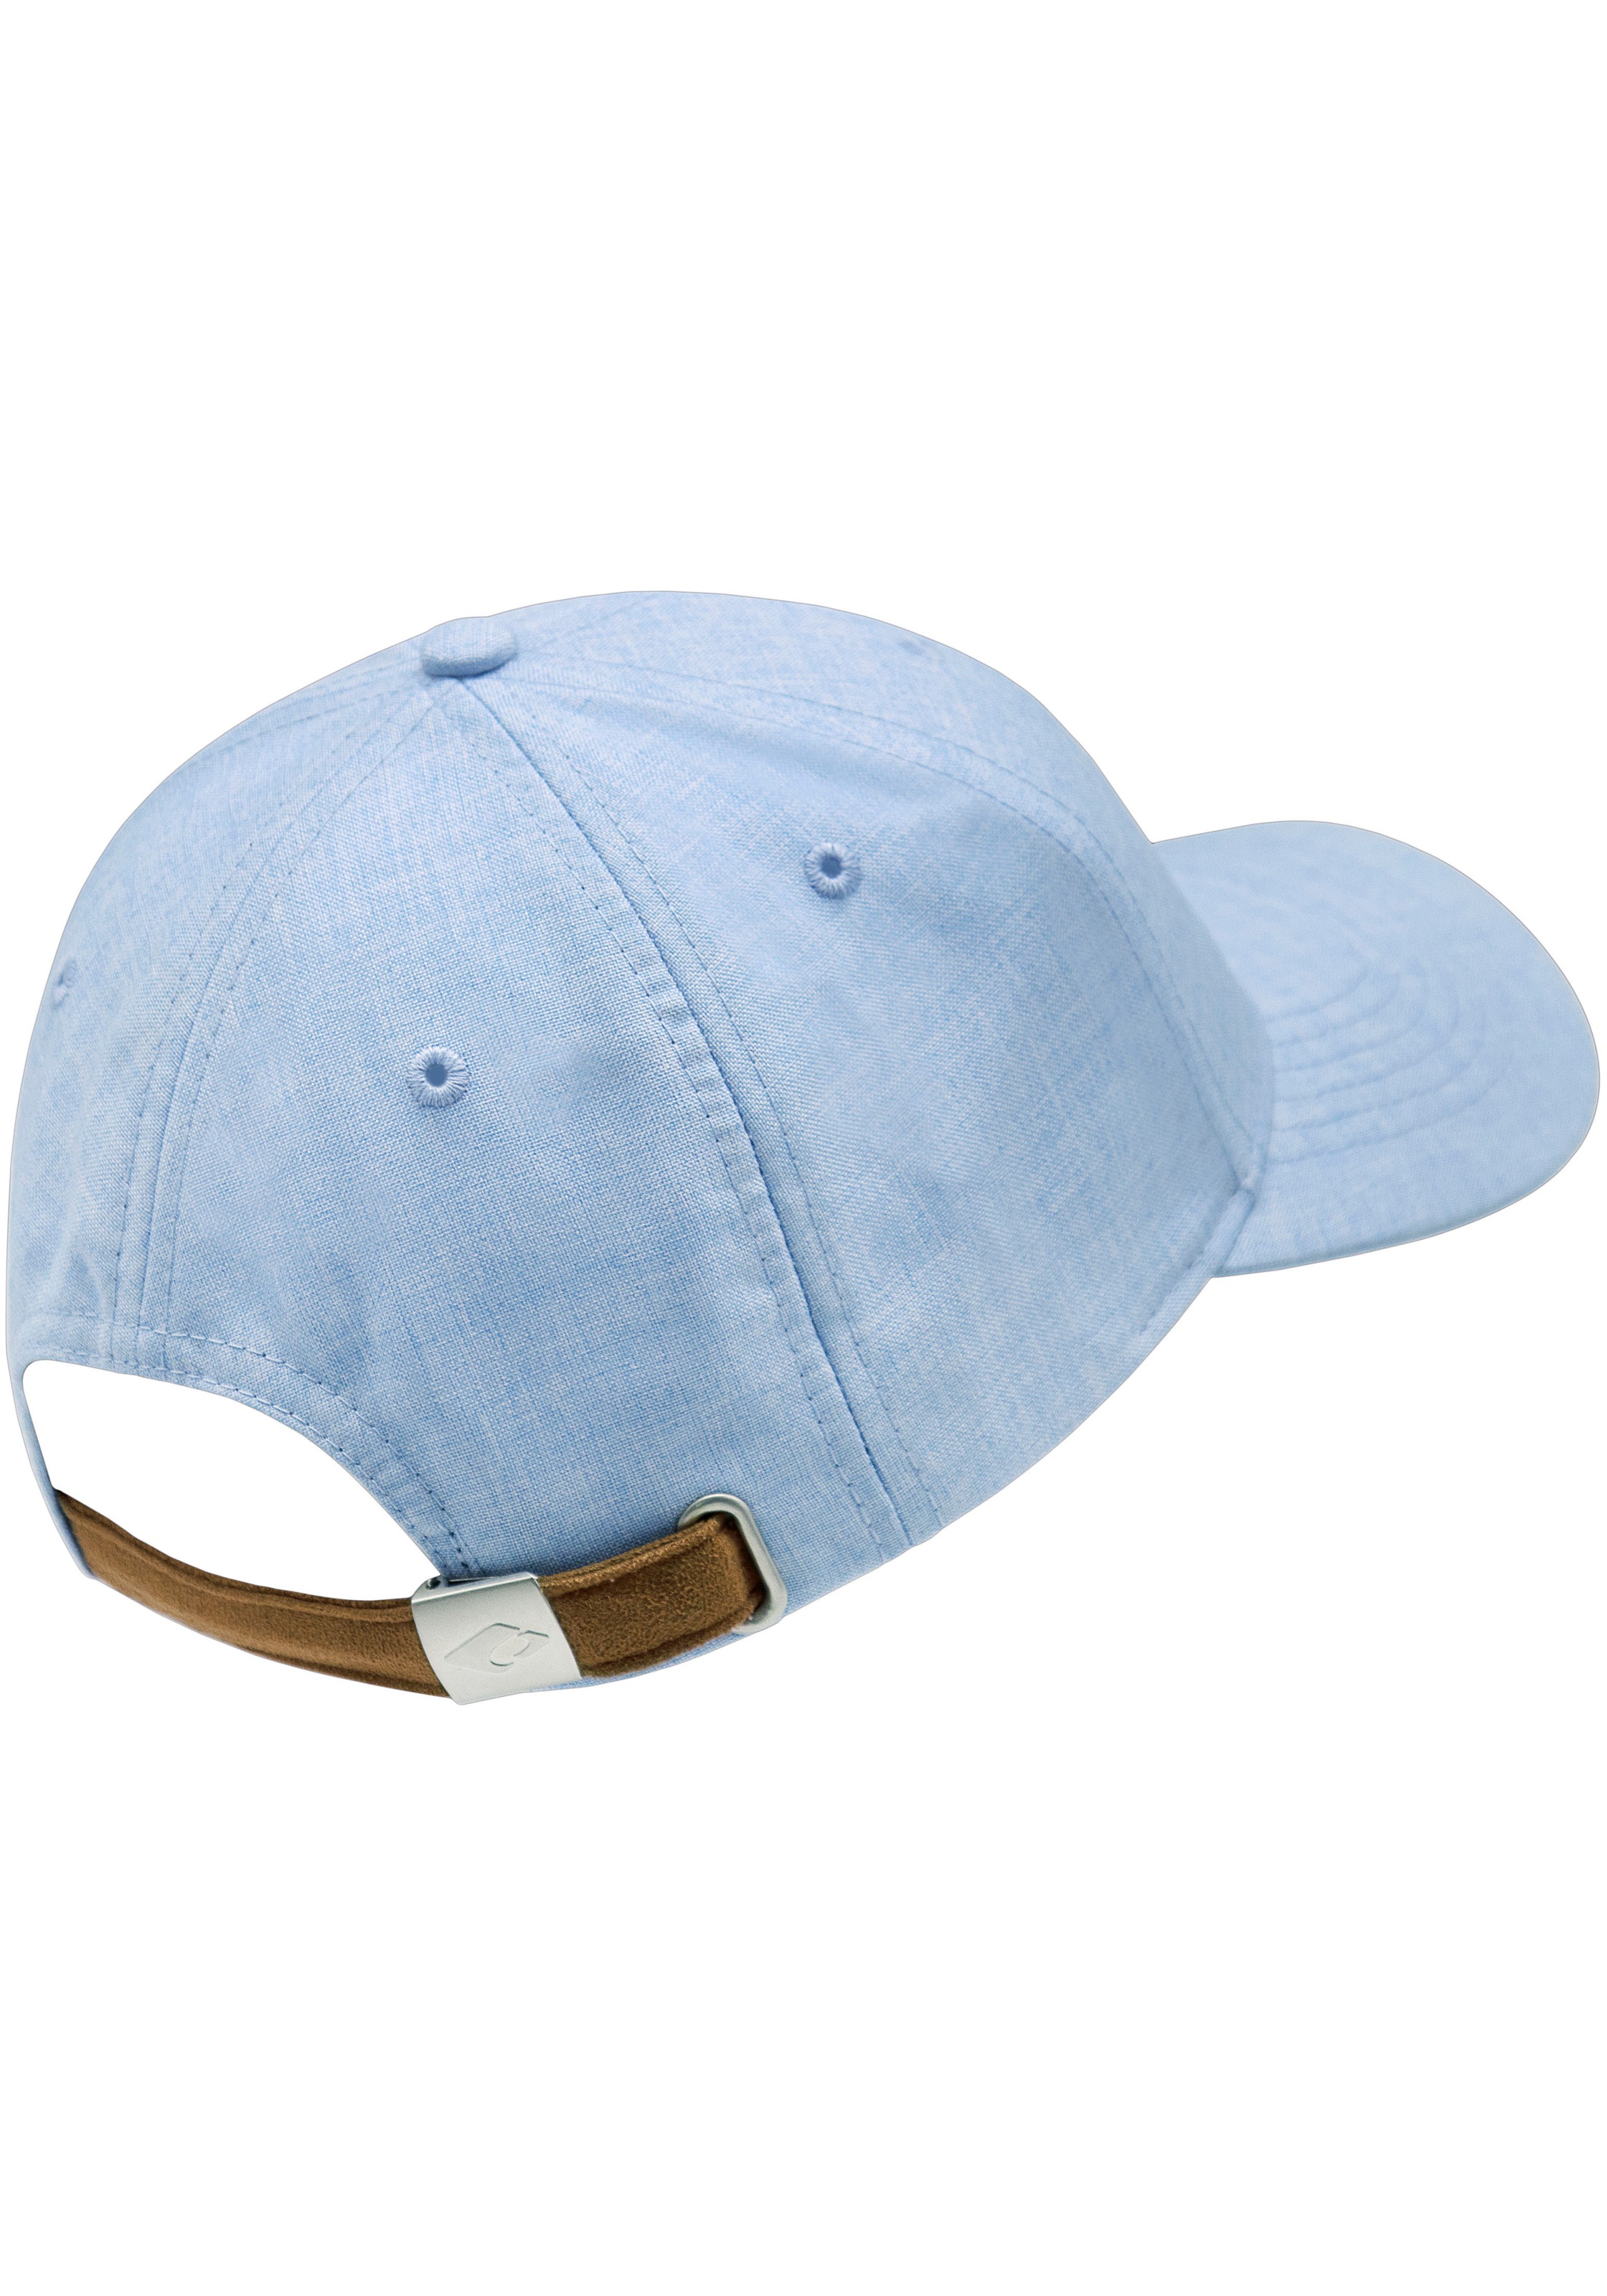 chillouts Baseball Cap, Amadora Hat in melierter Optik, One Size, verstellbar